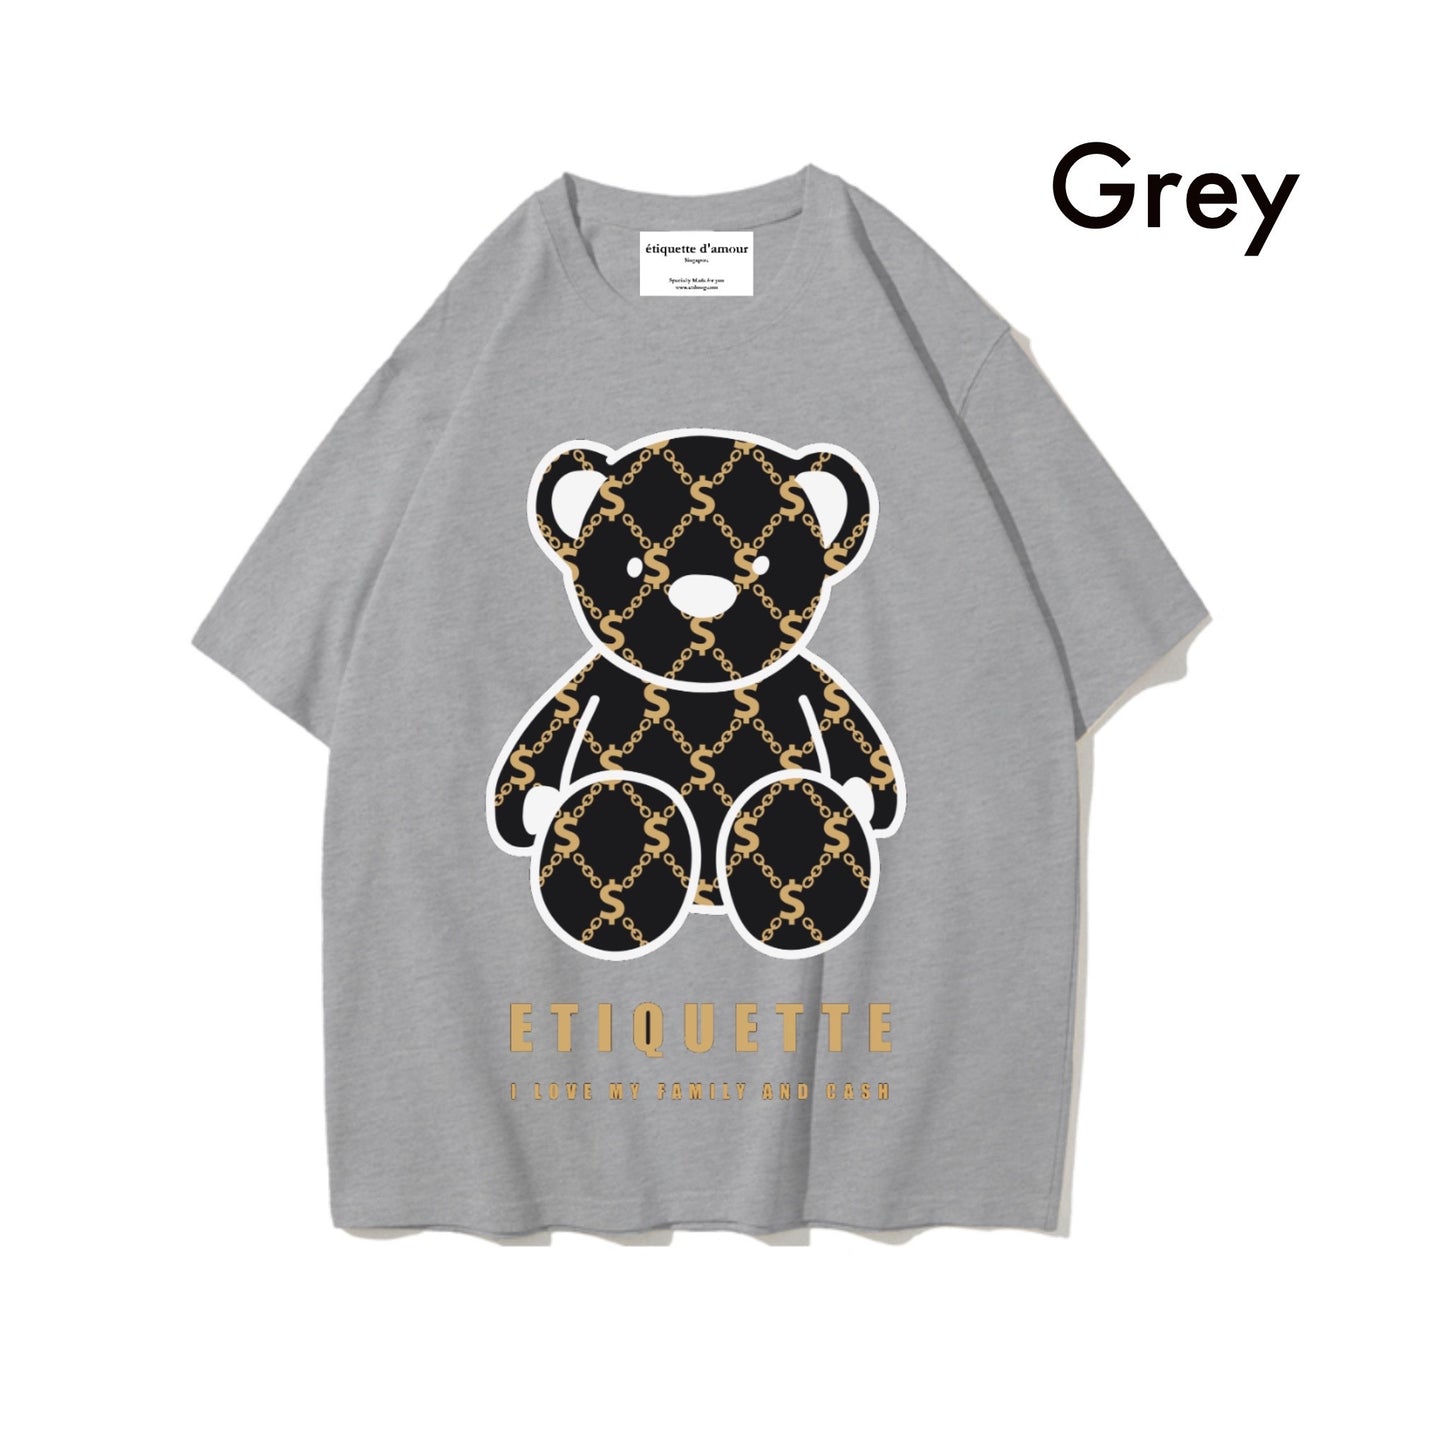 Etiquette Oversized T-Shirt - [0028] Etiquette Brand Bear